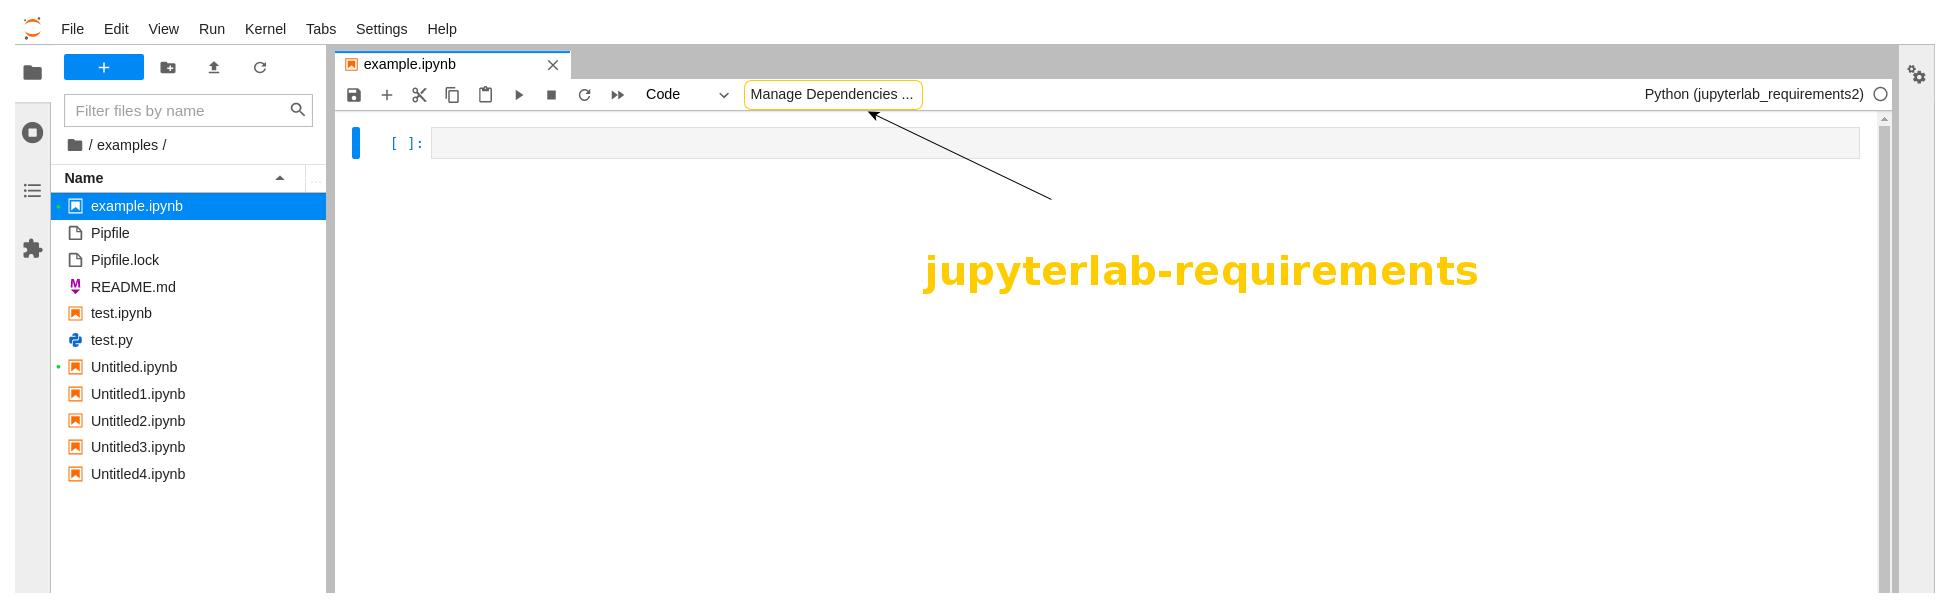 JupyterLab Requirements UI